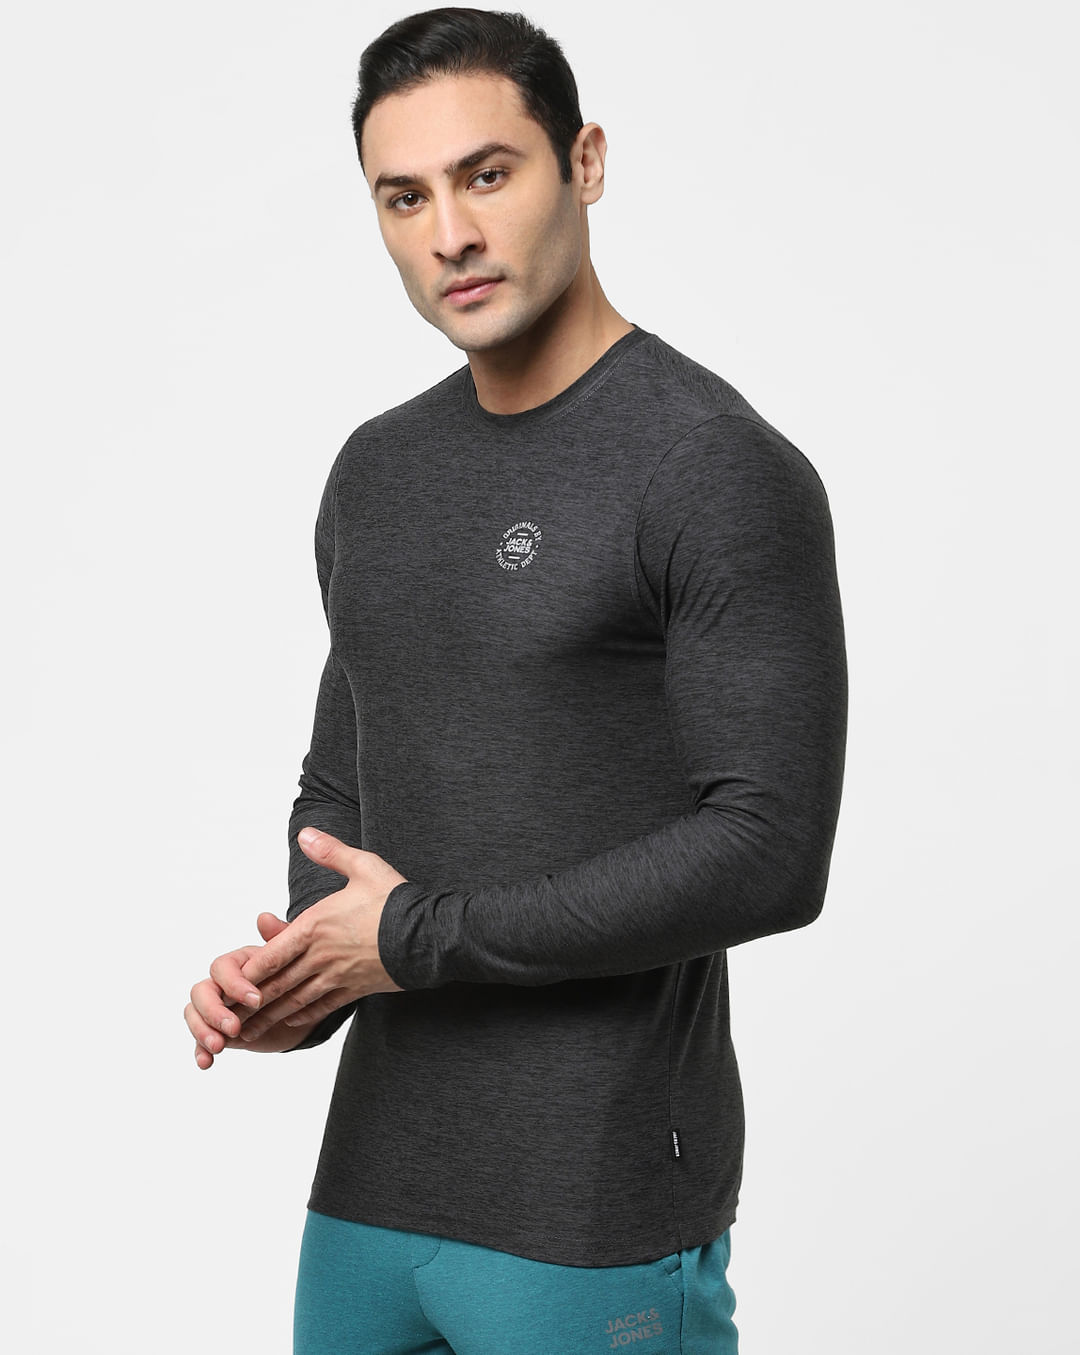 Jack & Jones®  Shop Men's Popular Long-Sleeve T-Shirts